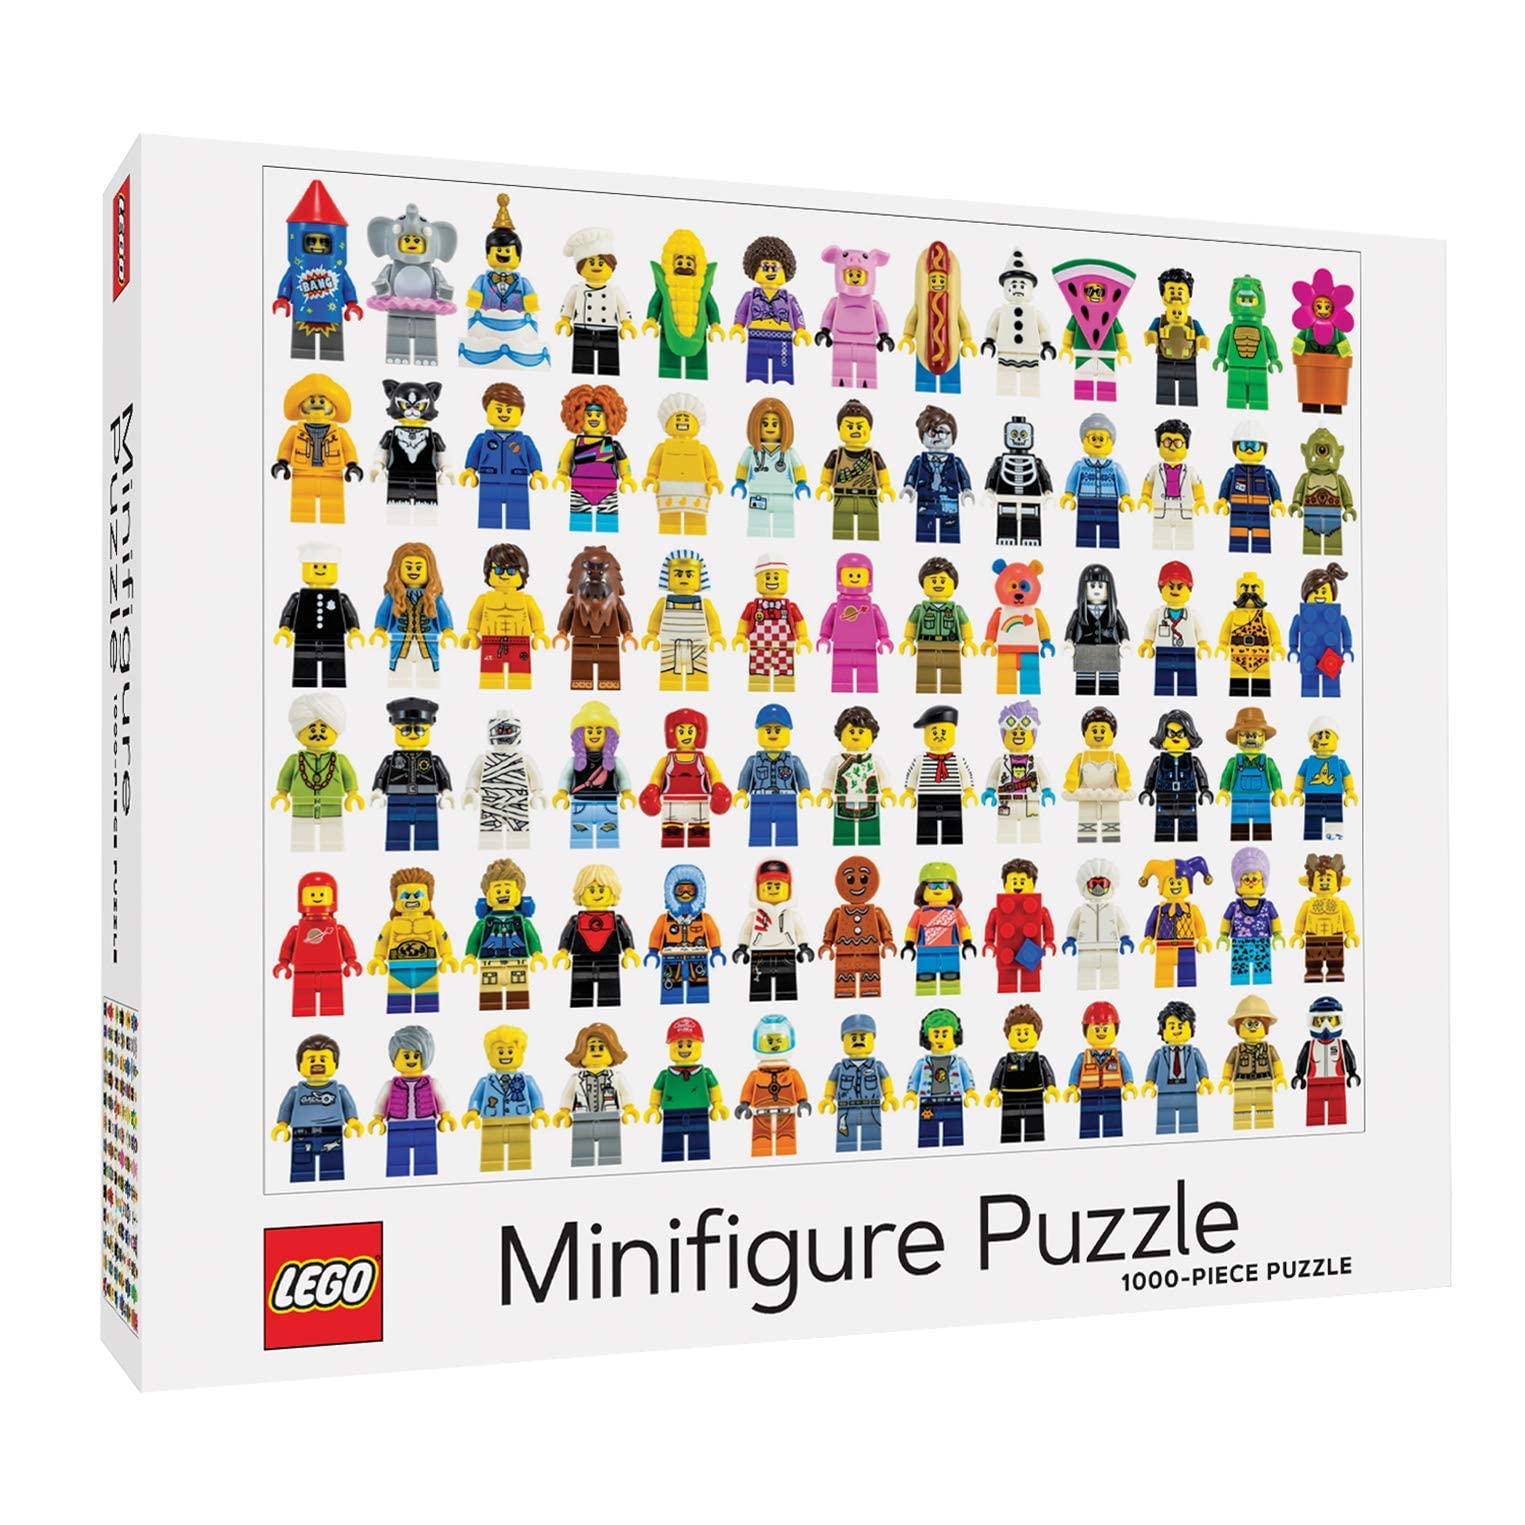 LEGO Minifigure Puzzle - $9.99